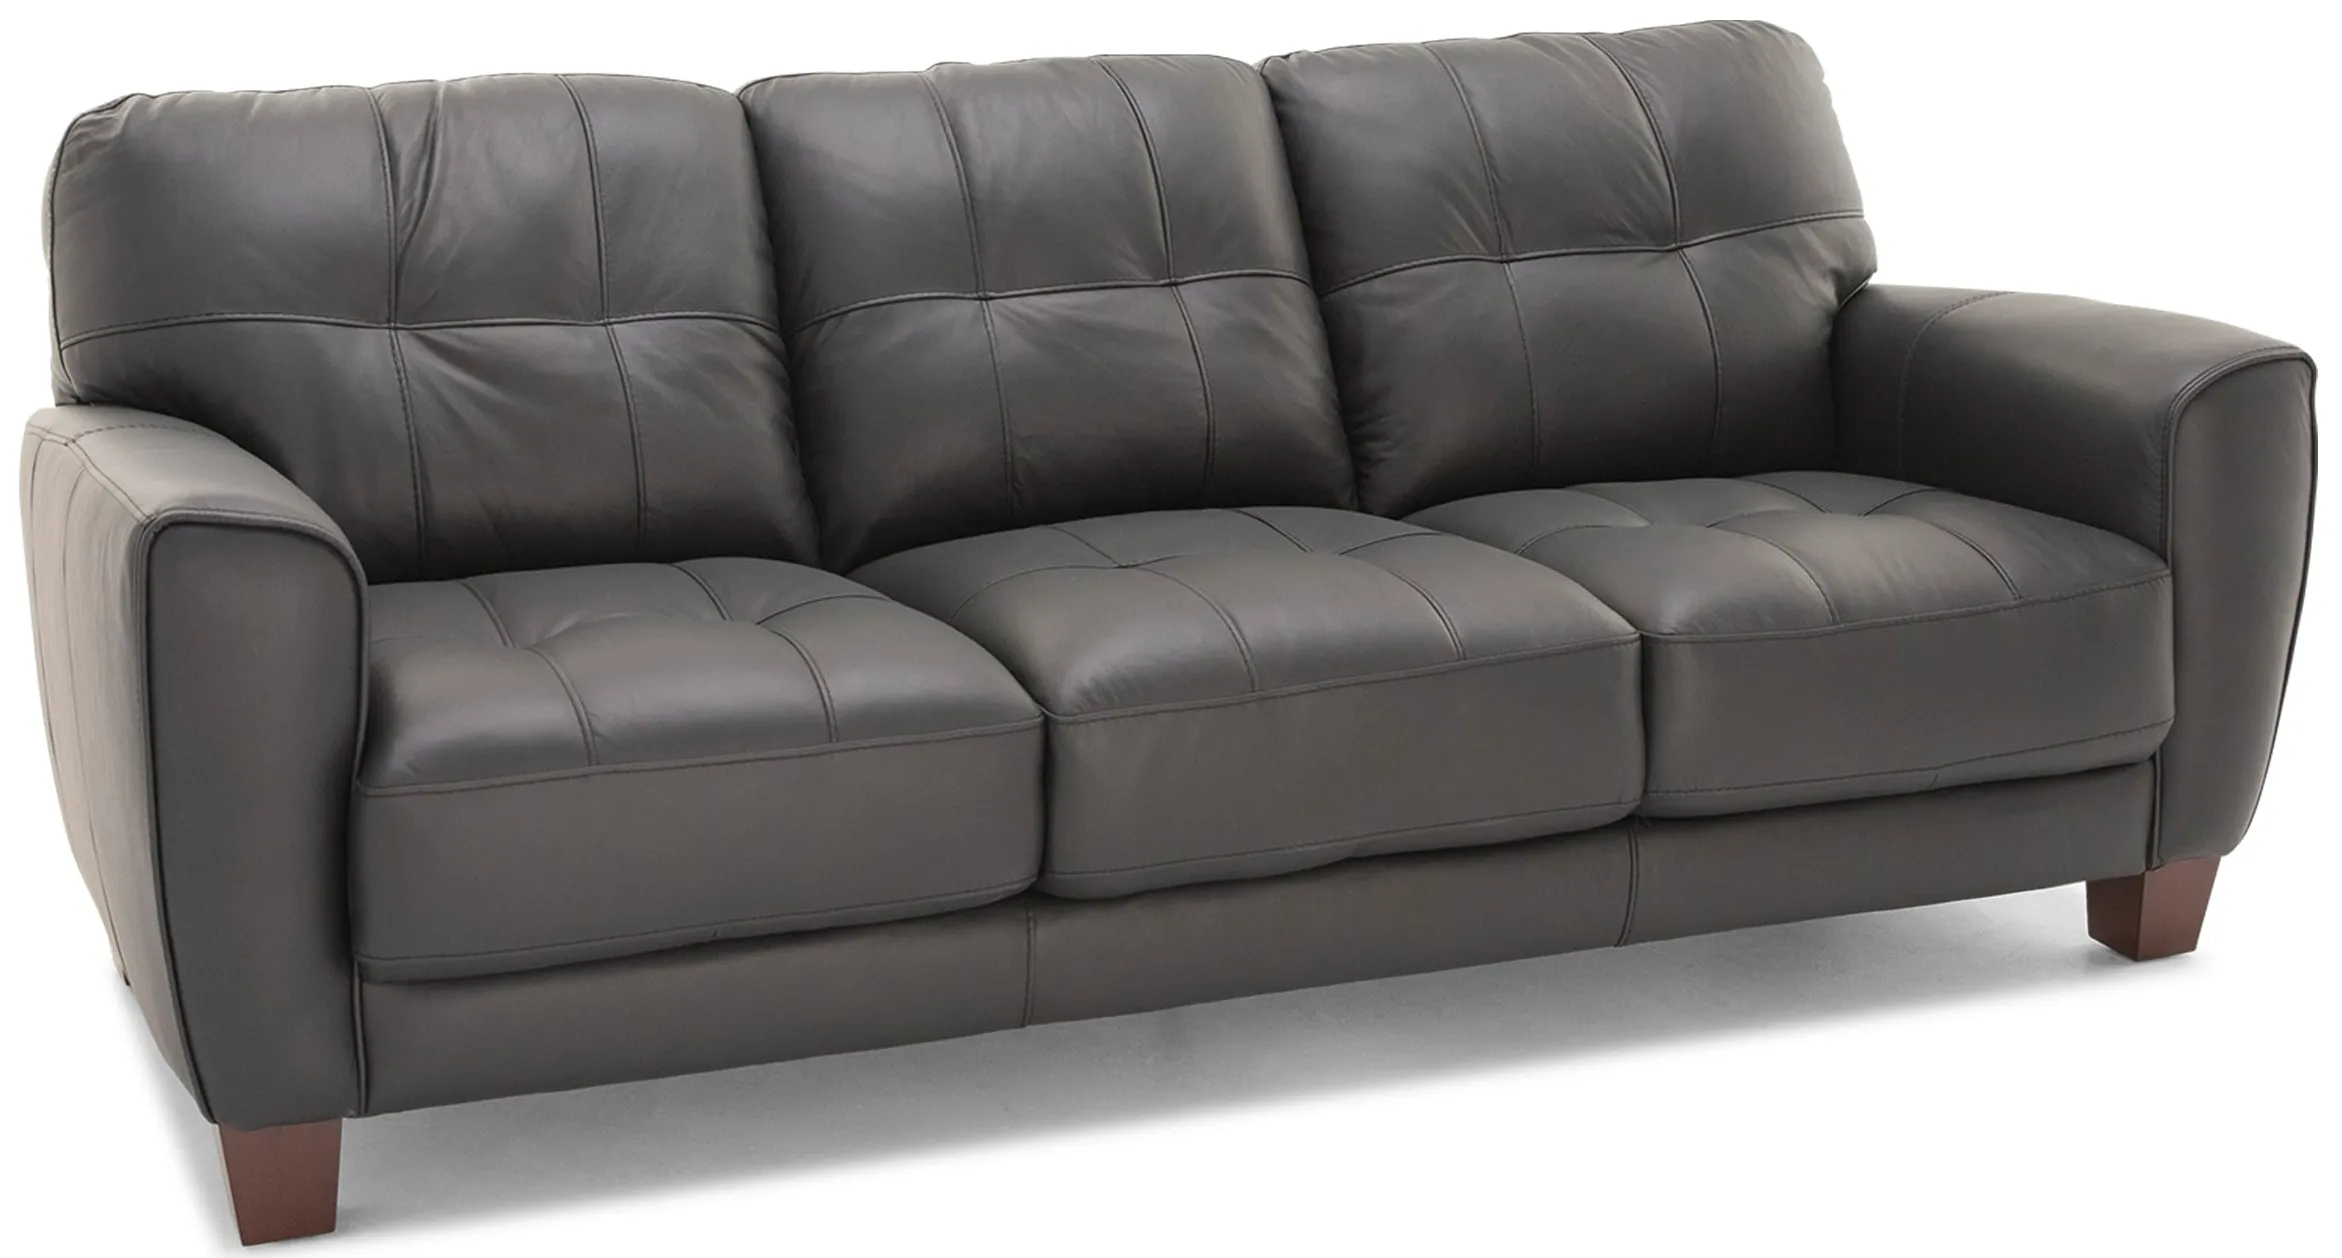 Bovale Leather Sofa